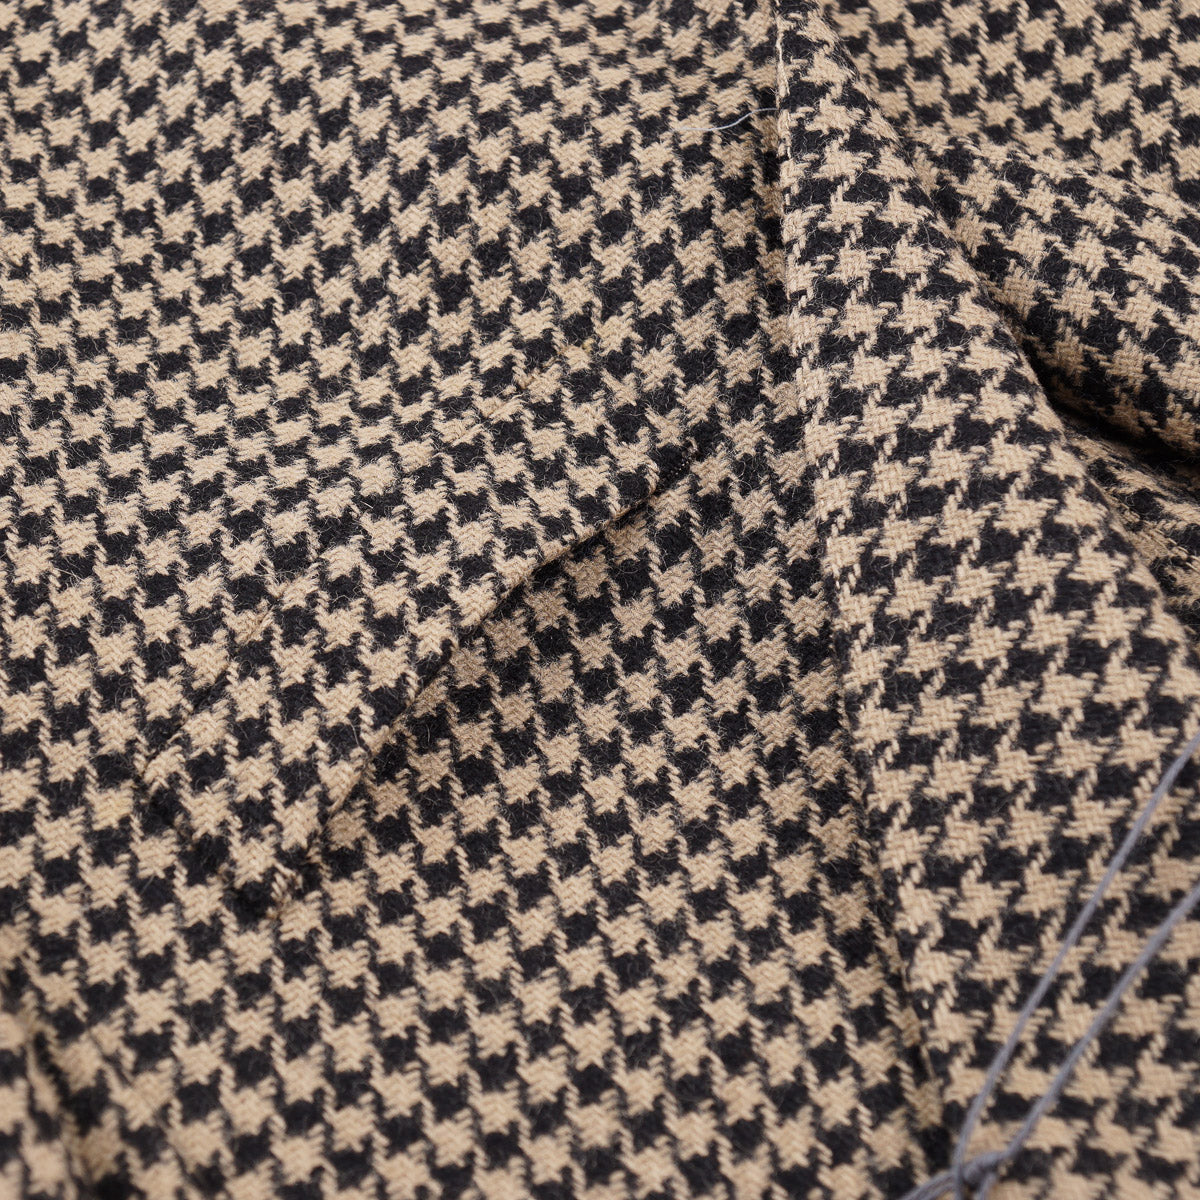 Boglioli Houndstooth Wool 'K Jacket' Sport Coat - Top Shelf Apparel